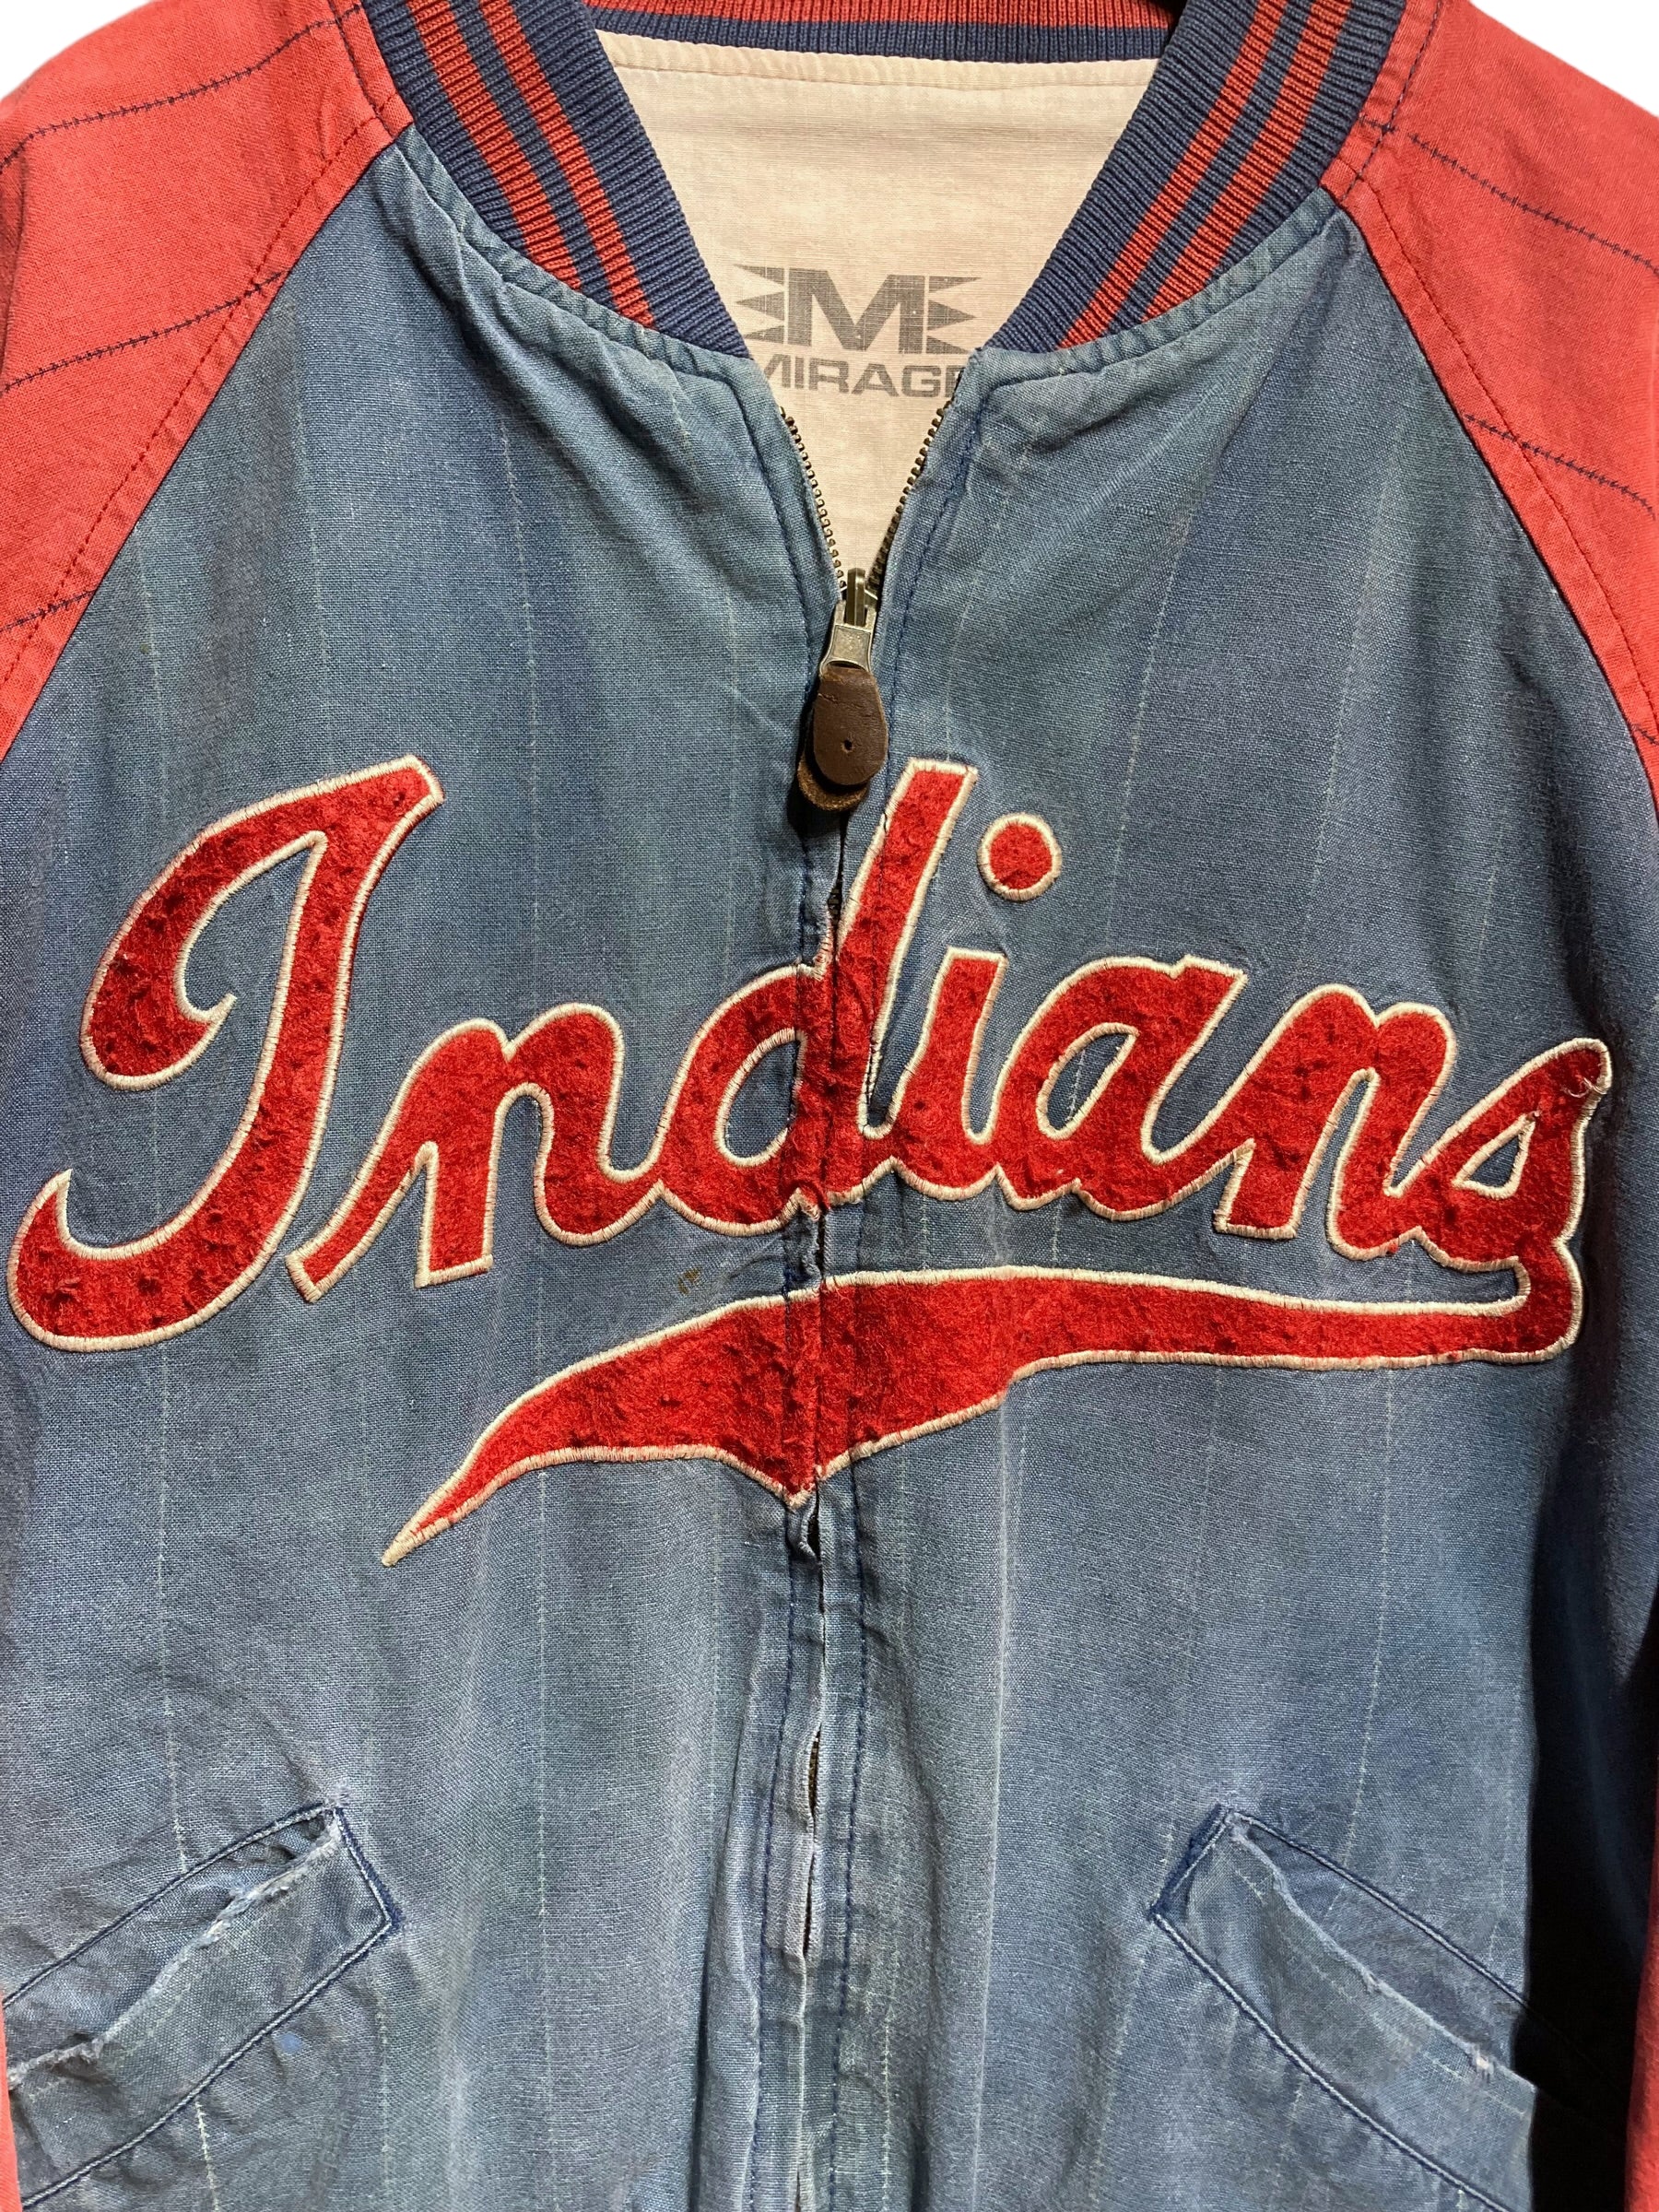 MIRAGE 90s stadium jacket スタジアムジャケット MLB Indians 